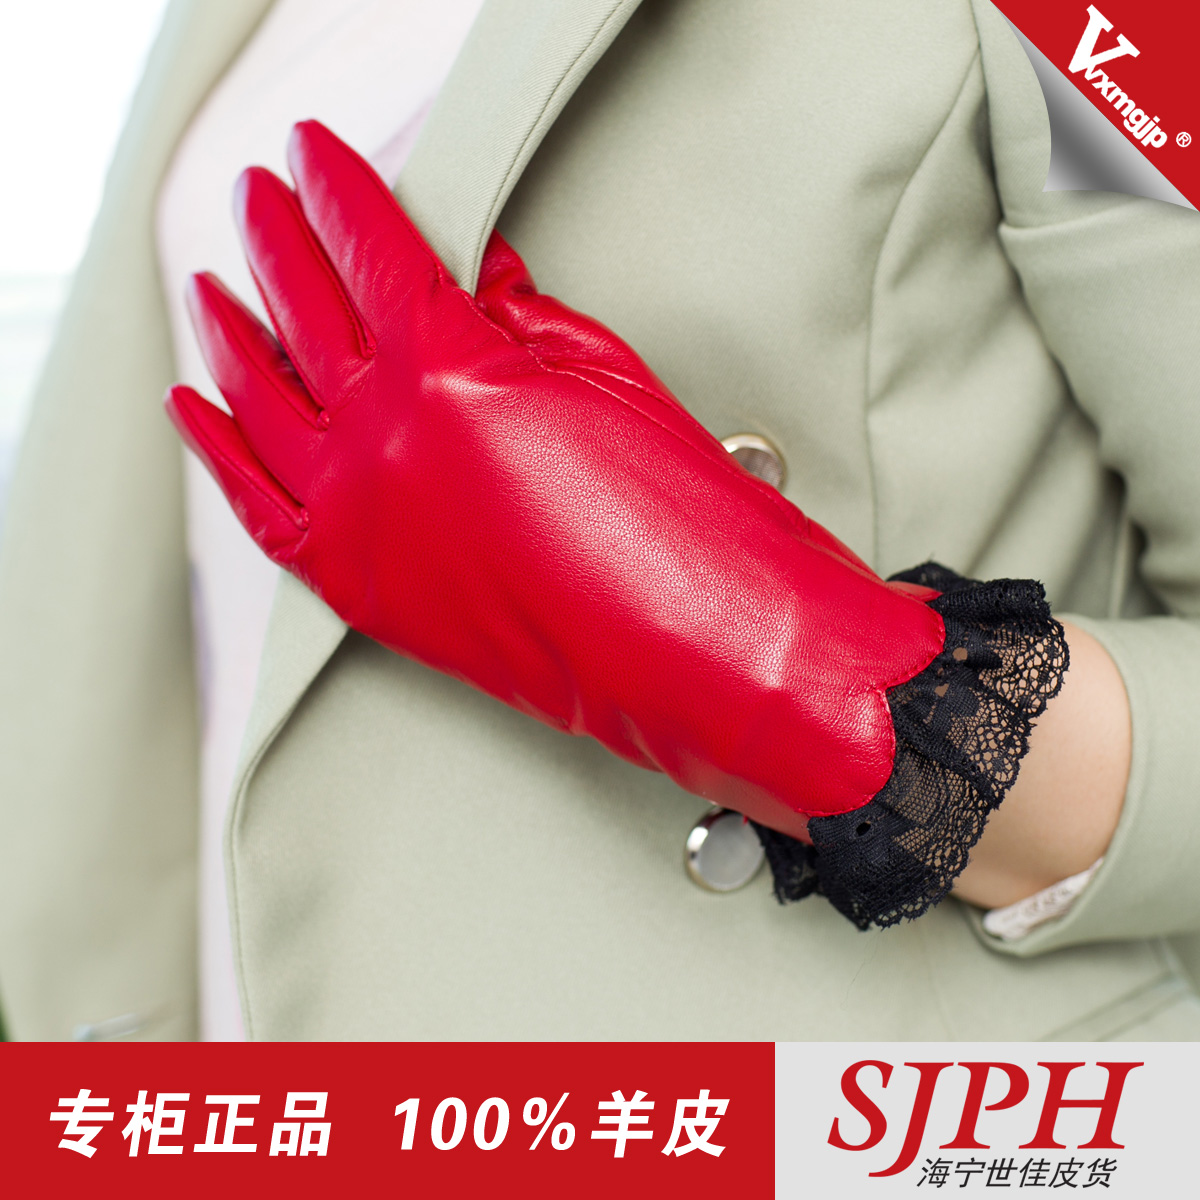 Top suede genuine leather gloves winter thermal women's fashion sheepskin gloves